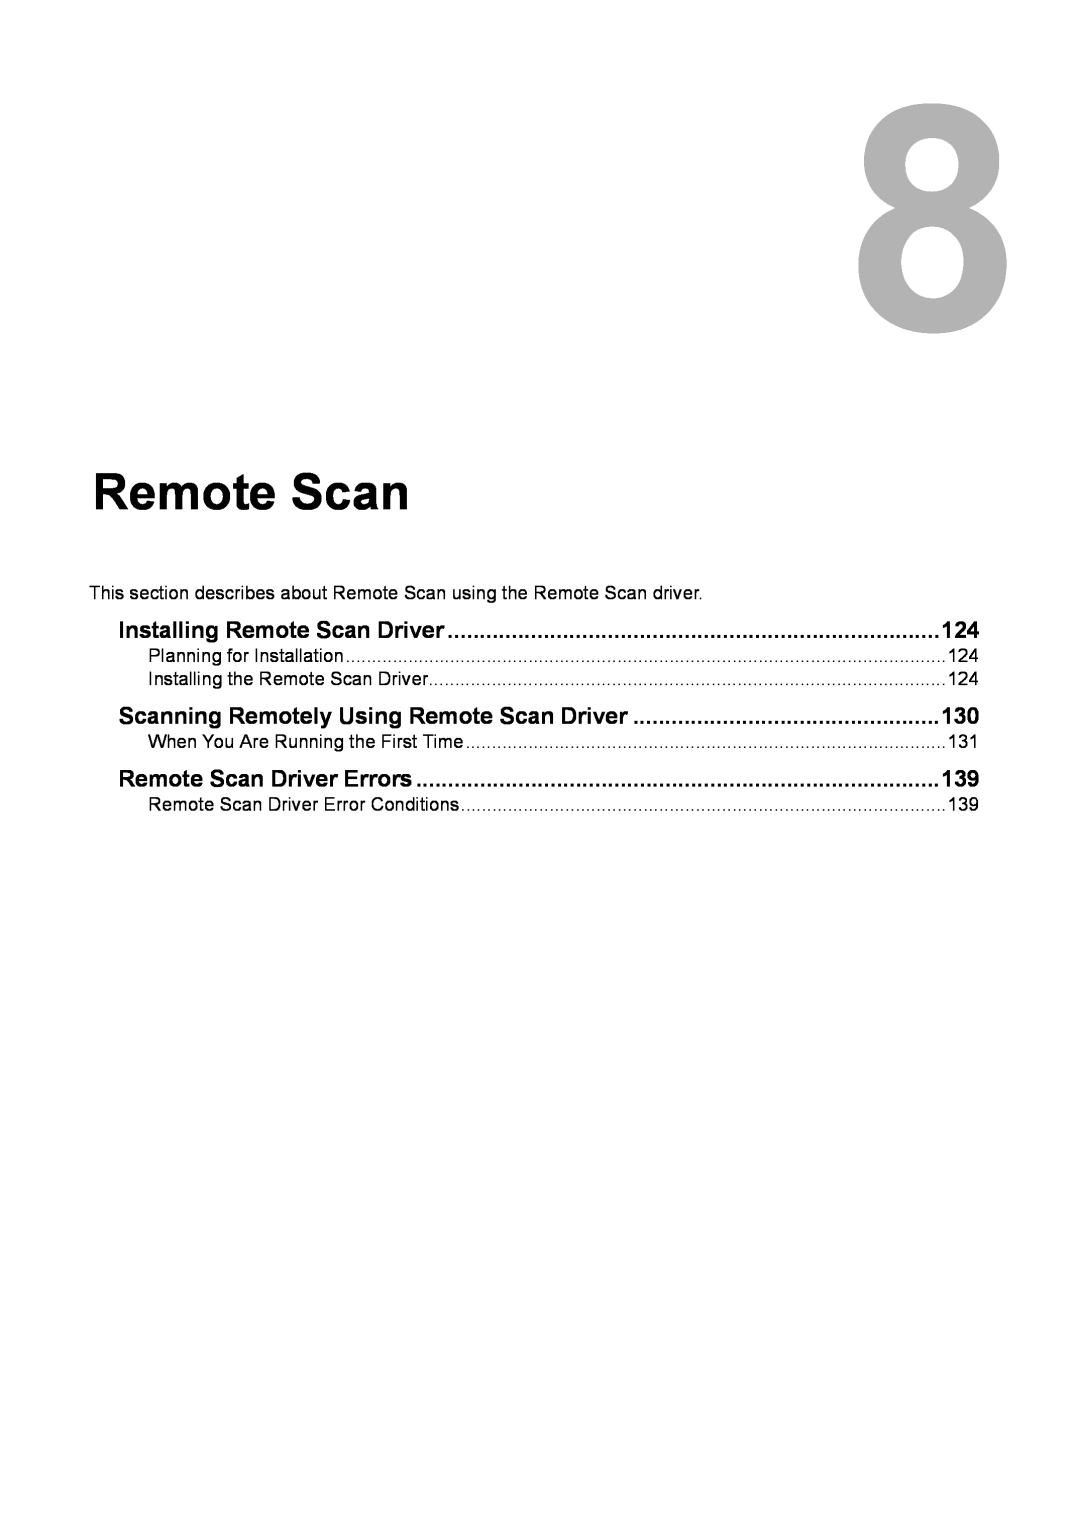 Toshiba 3510C Installing Remote Scan Driver, Scanning Remotely Using Remote Scan Driver, Remote Scan Driver Errors 